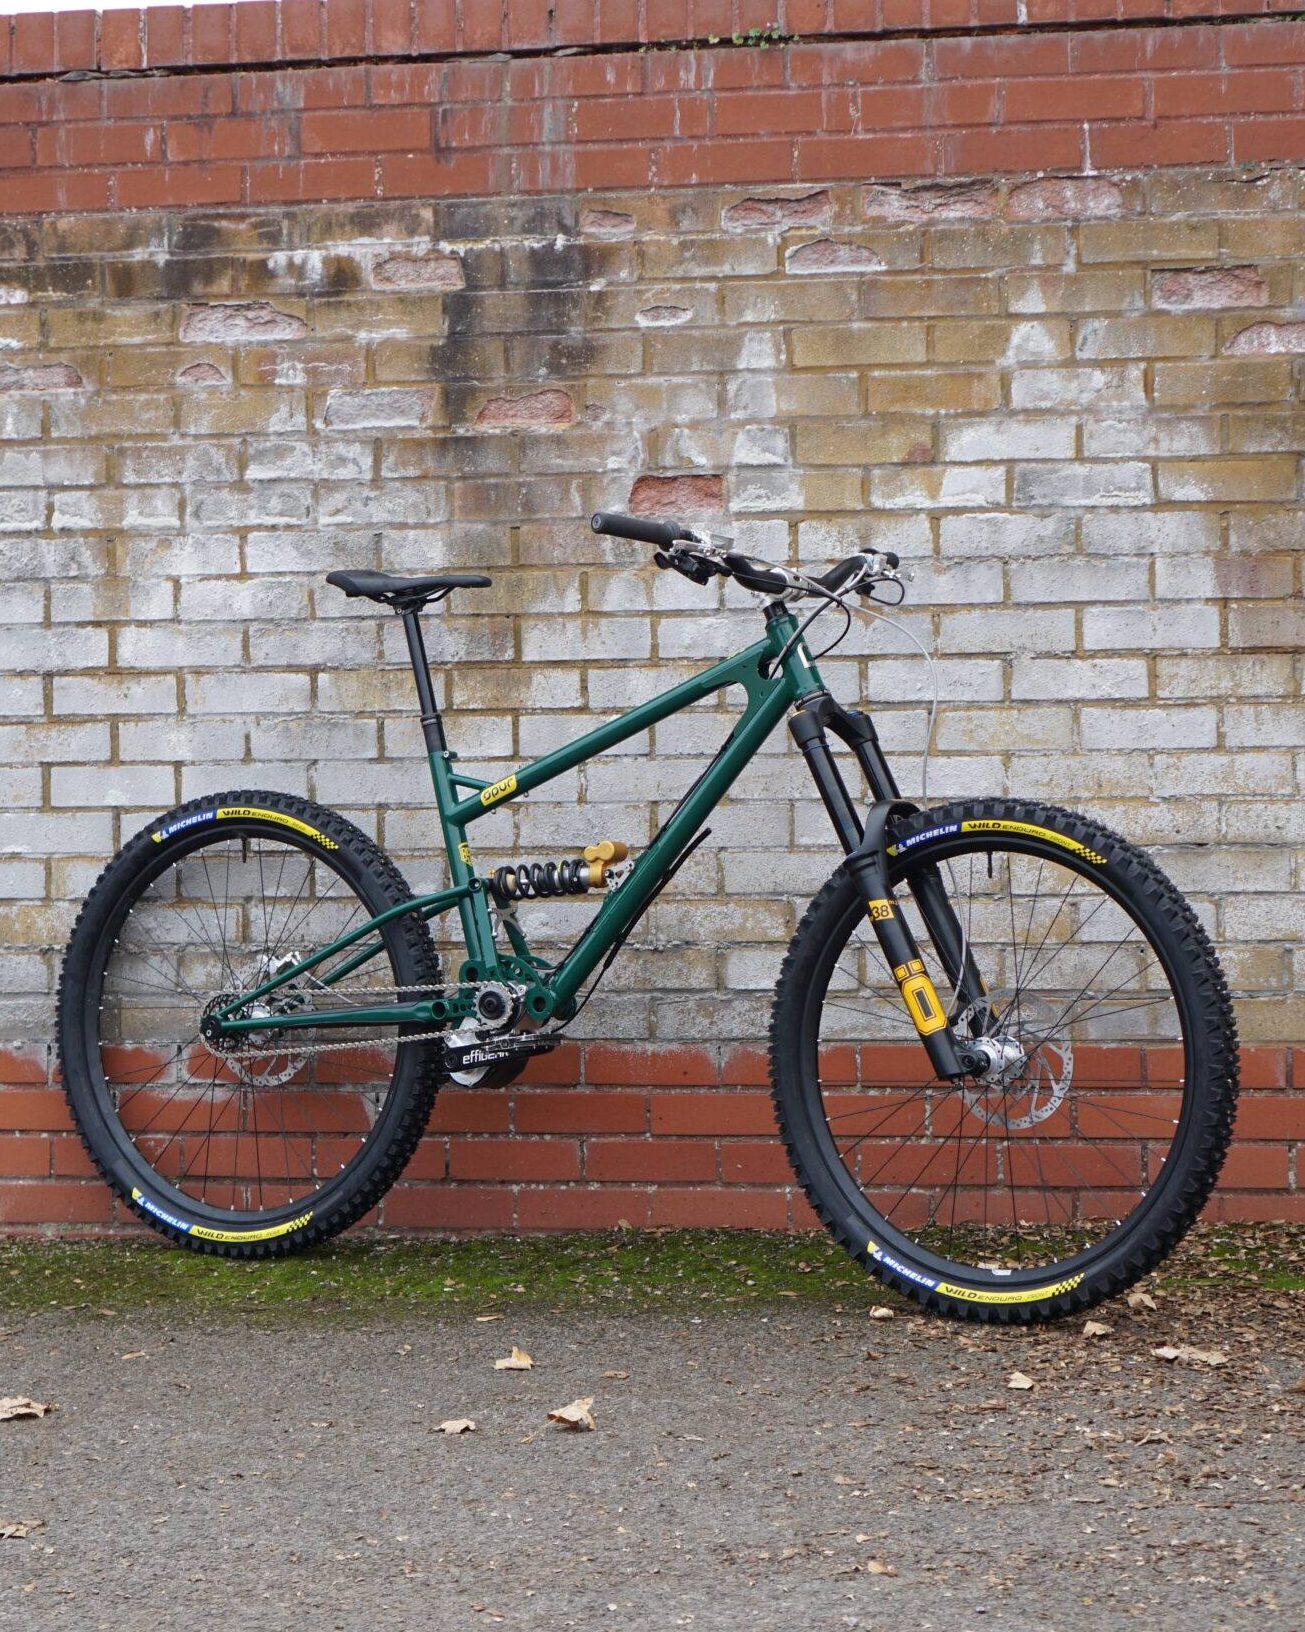 ENDED: Starling Spur – Full Bike worth £8000!